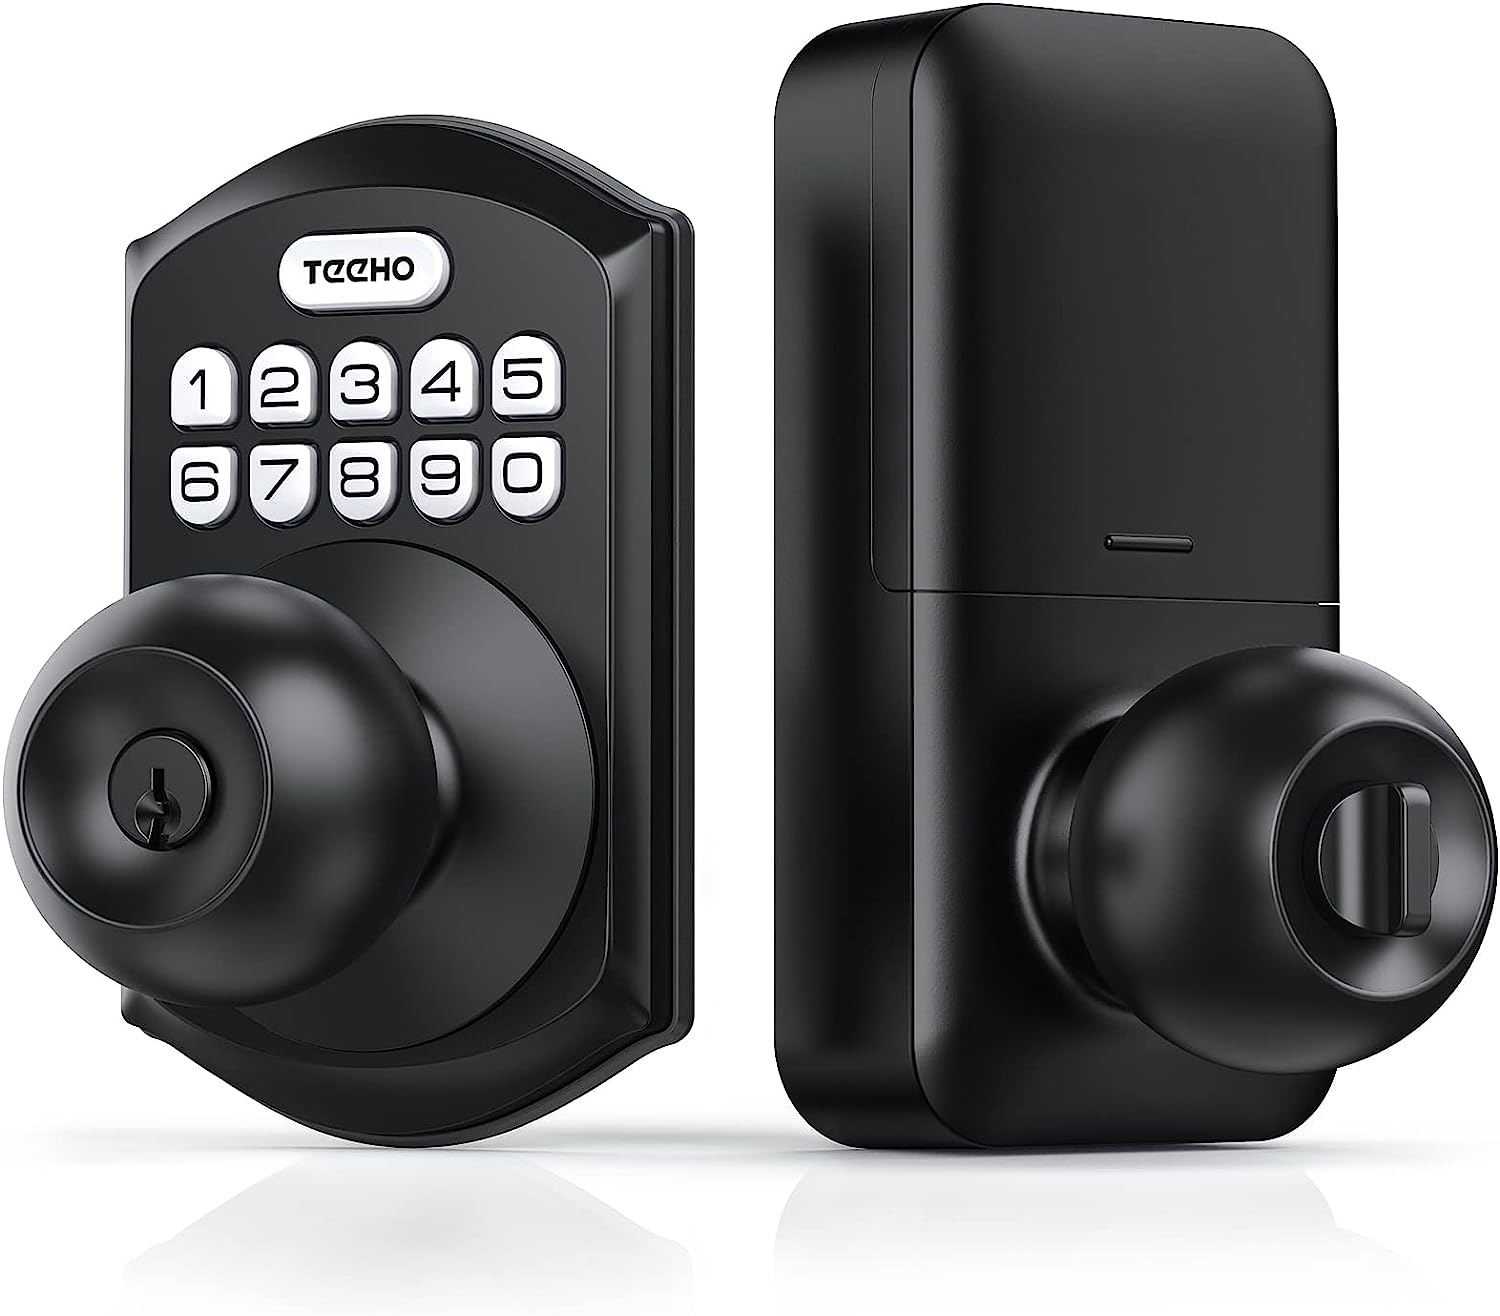 residential door locks product review